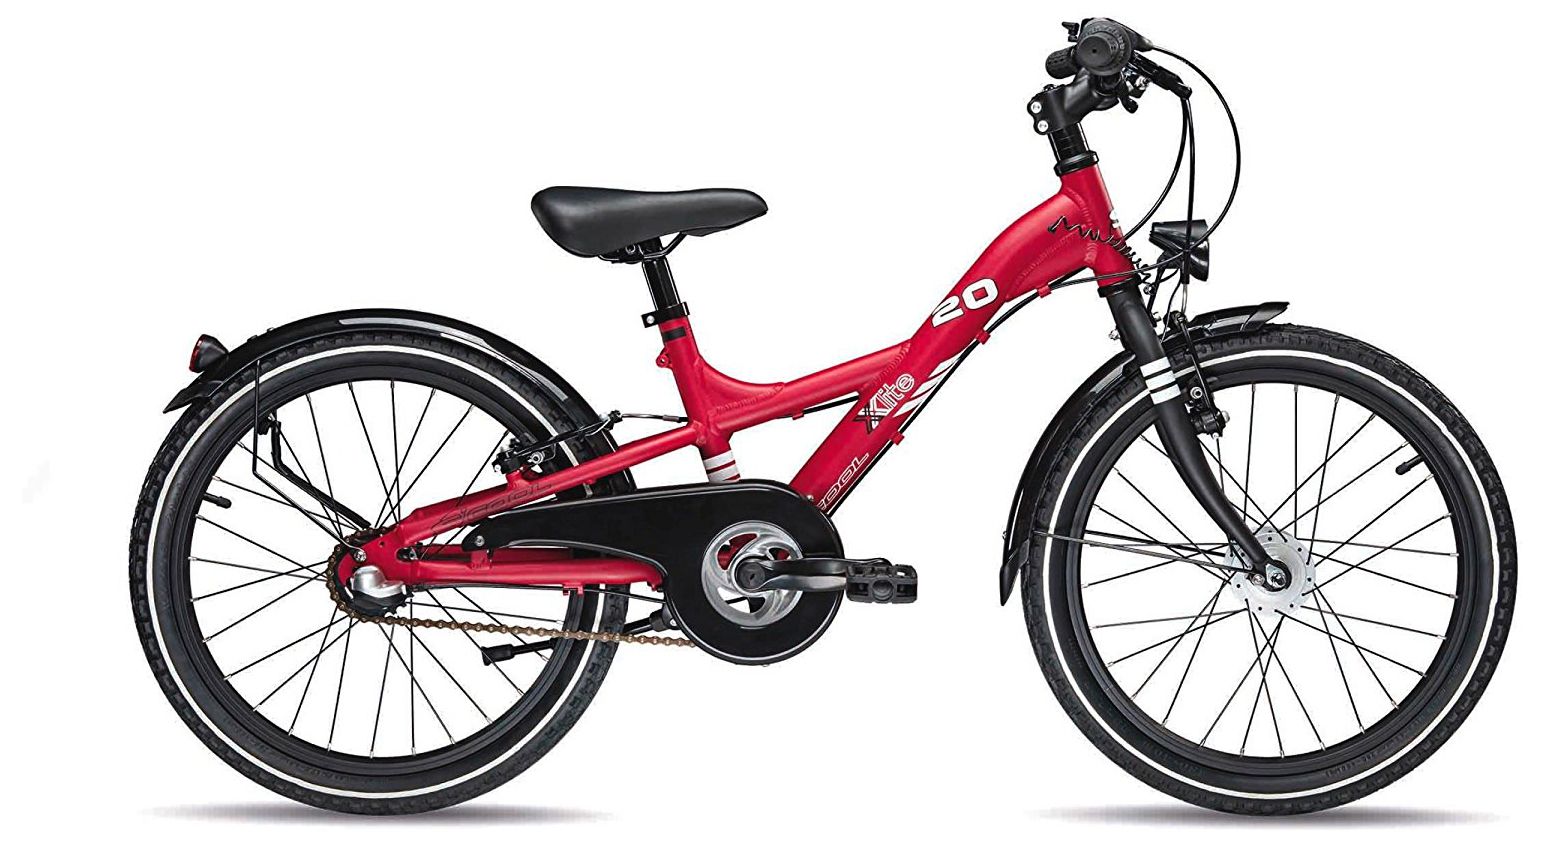  Отзывы о Детском велосипеде Scool XXlite comp 20-3 2015